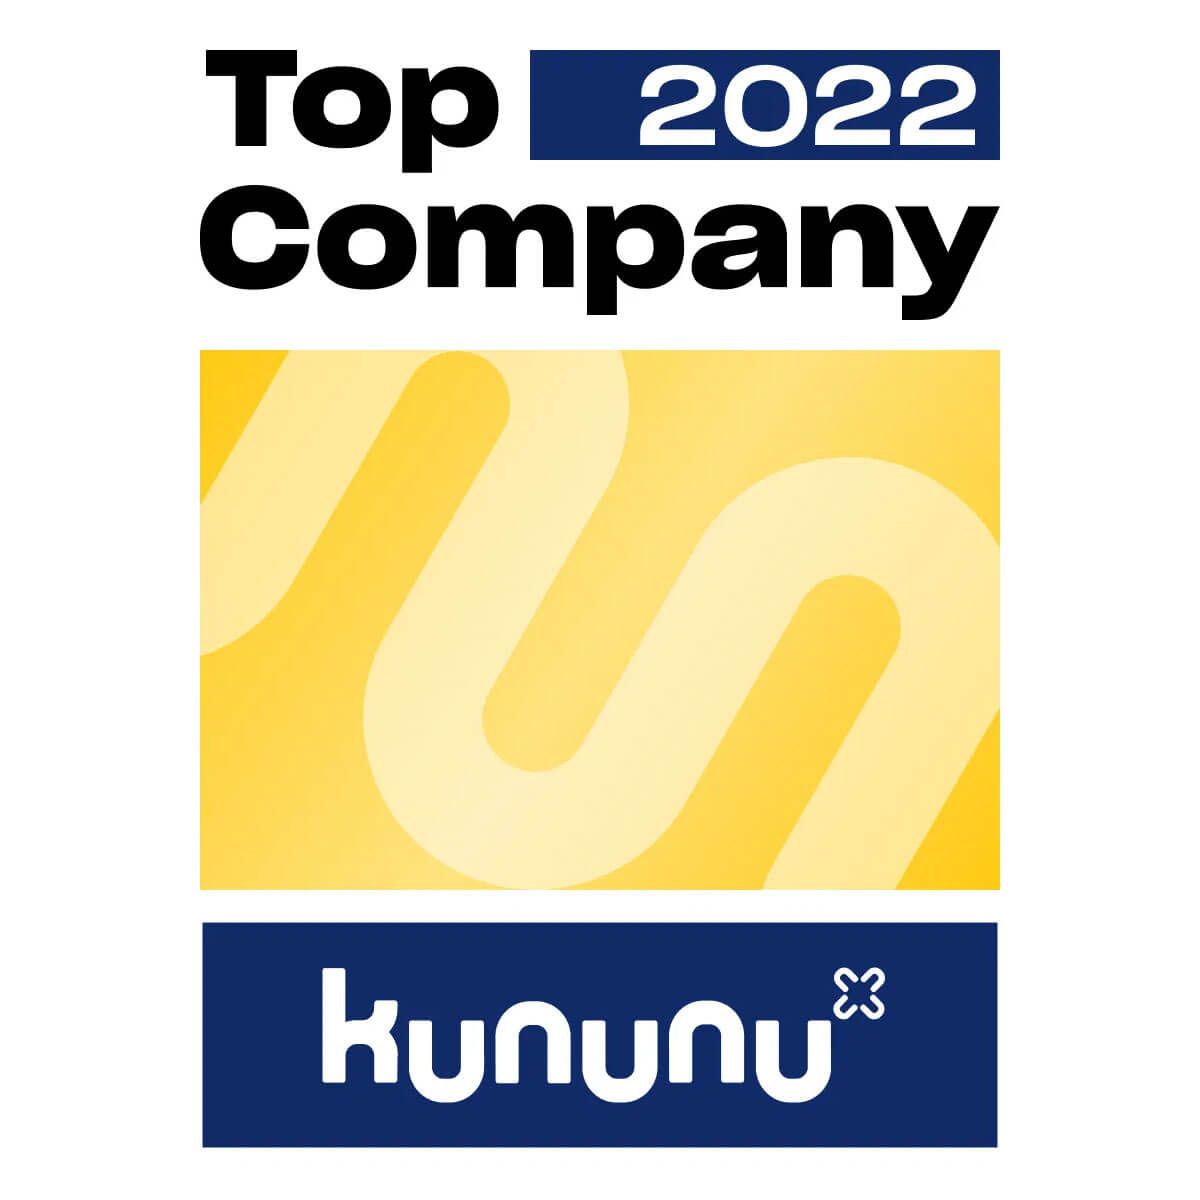 kununu-Top-Company-2022kYxiXIBiSlglI